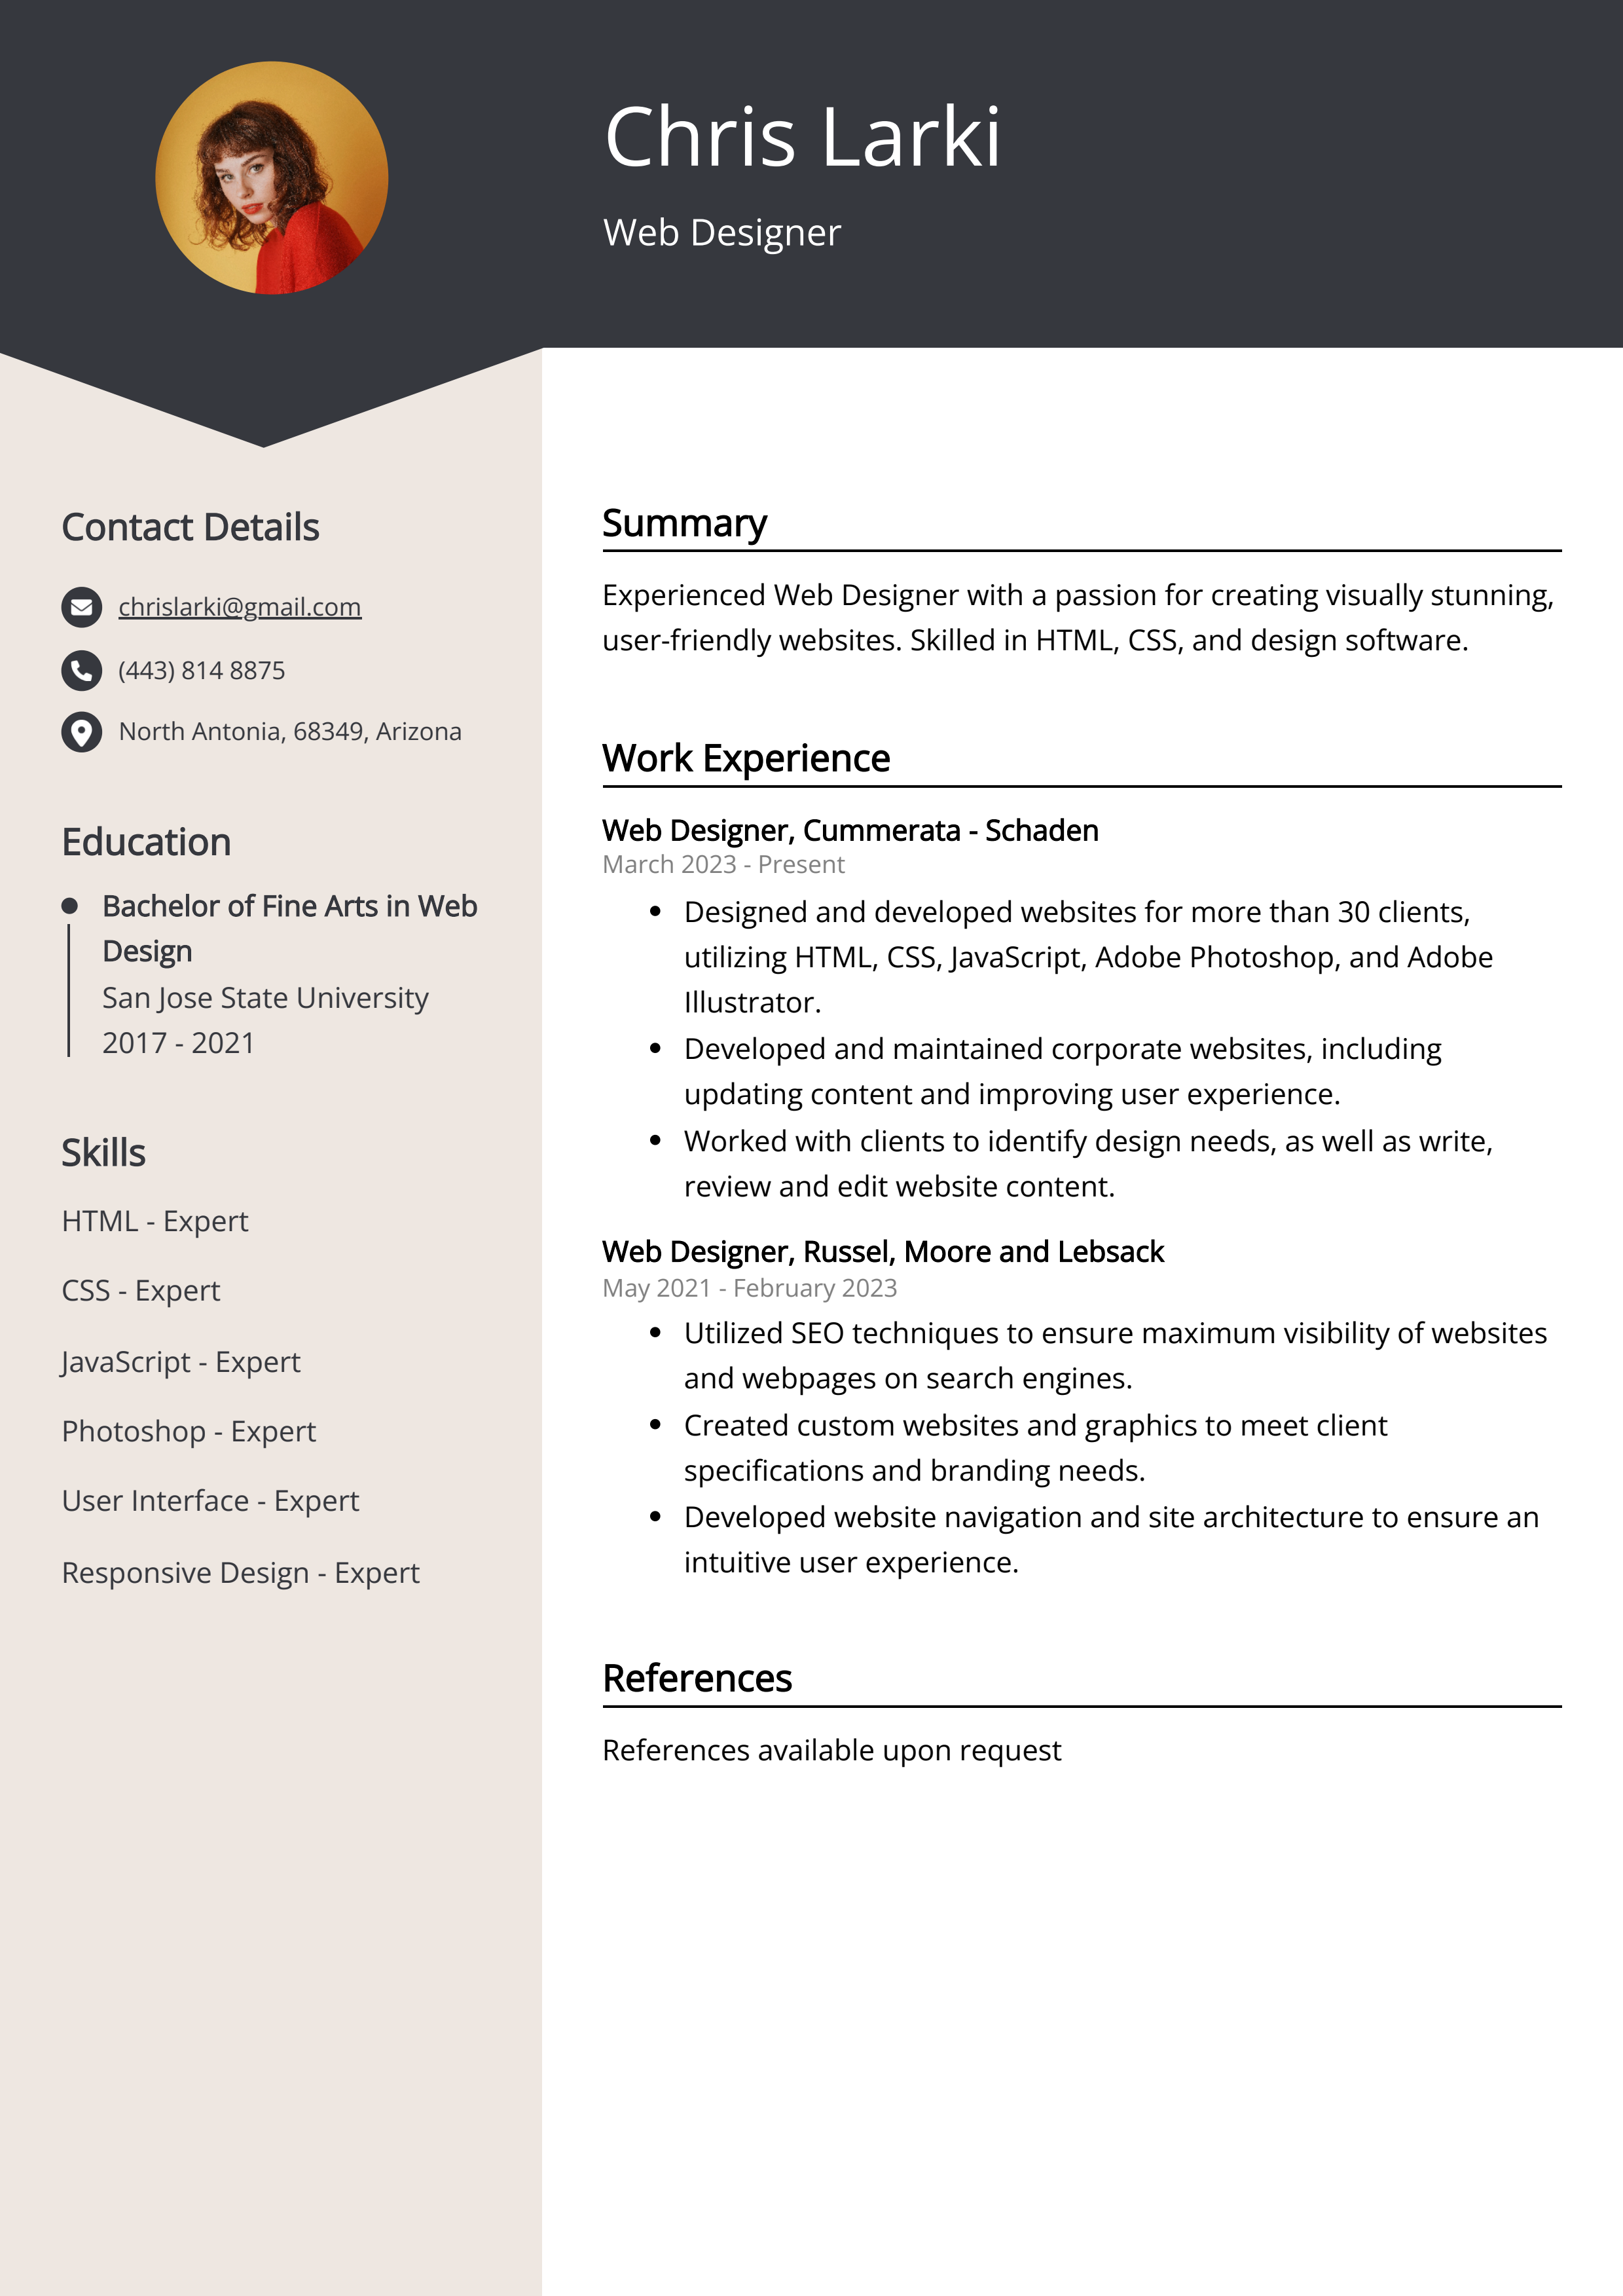 Web Designer CV Example